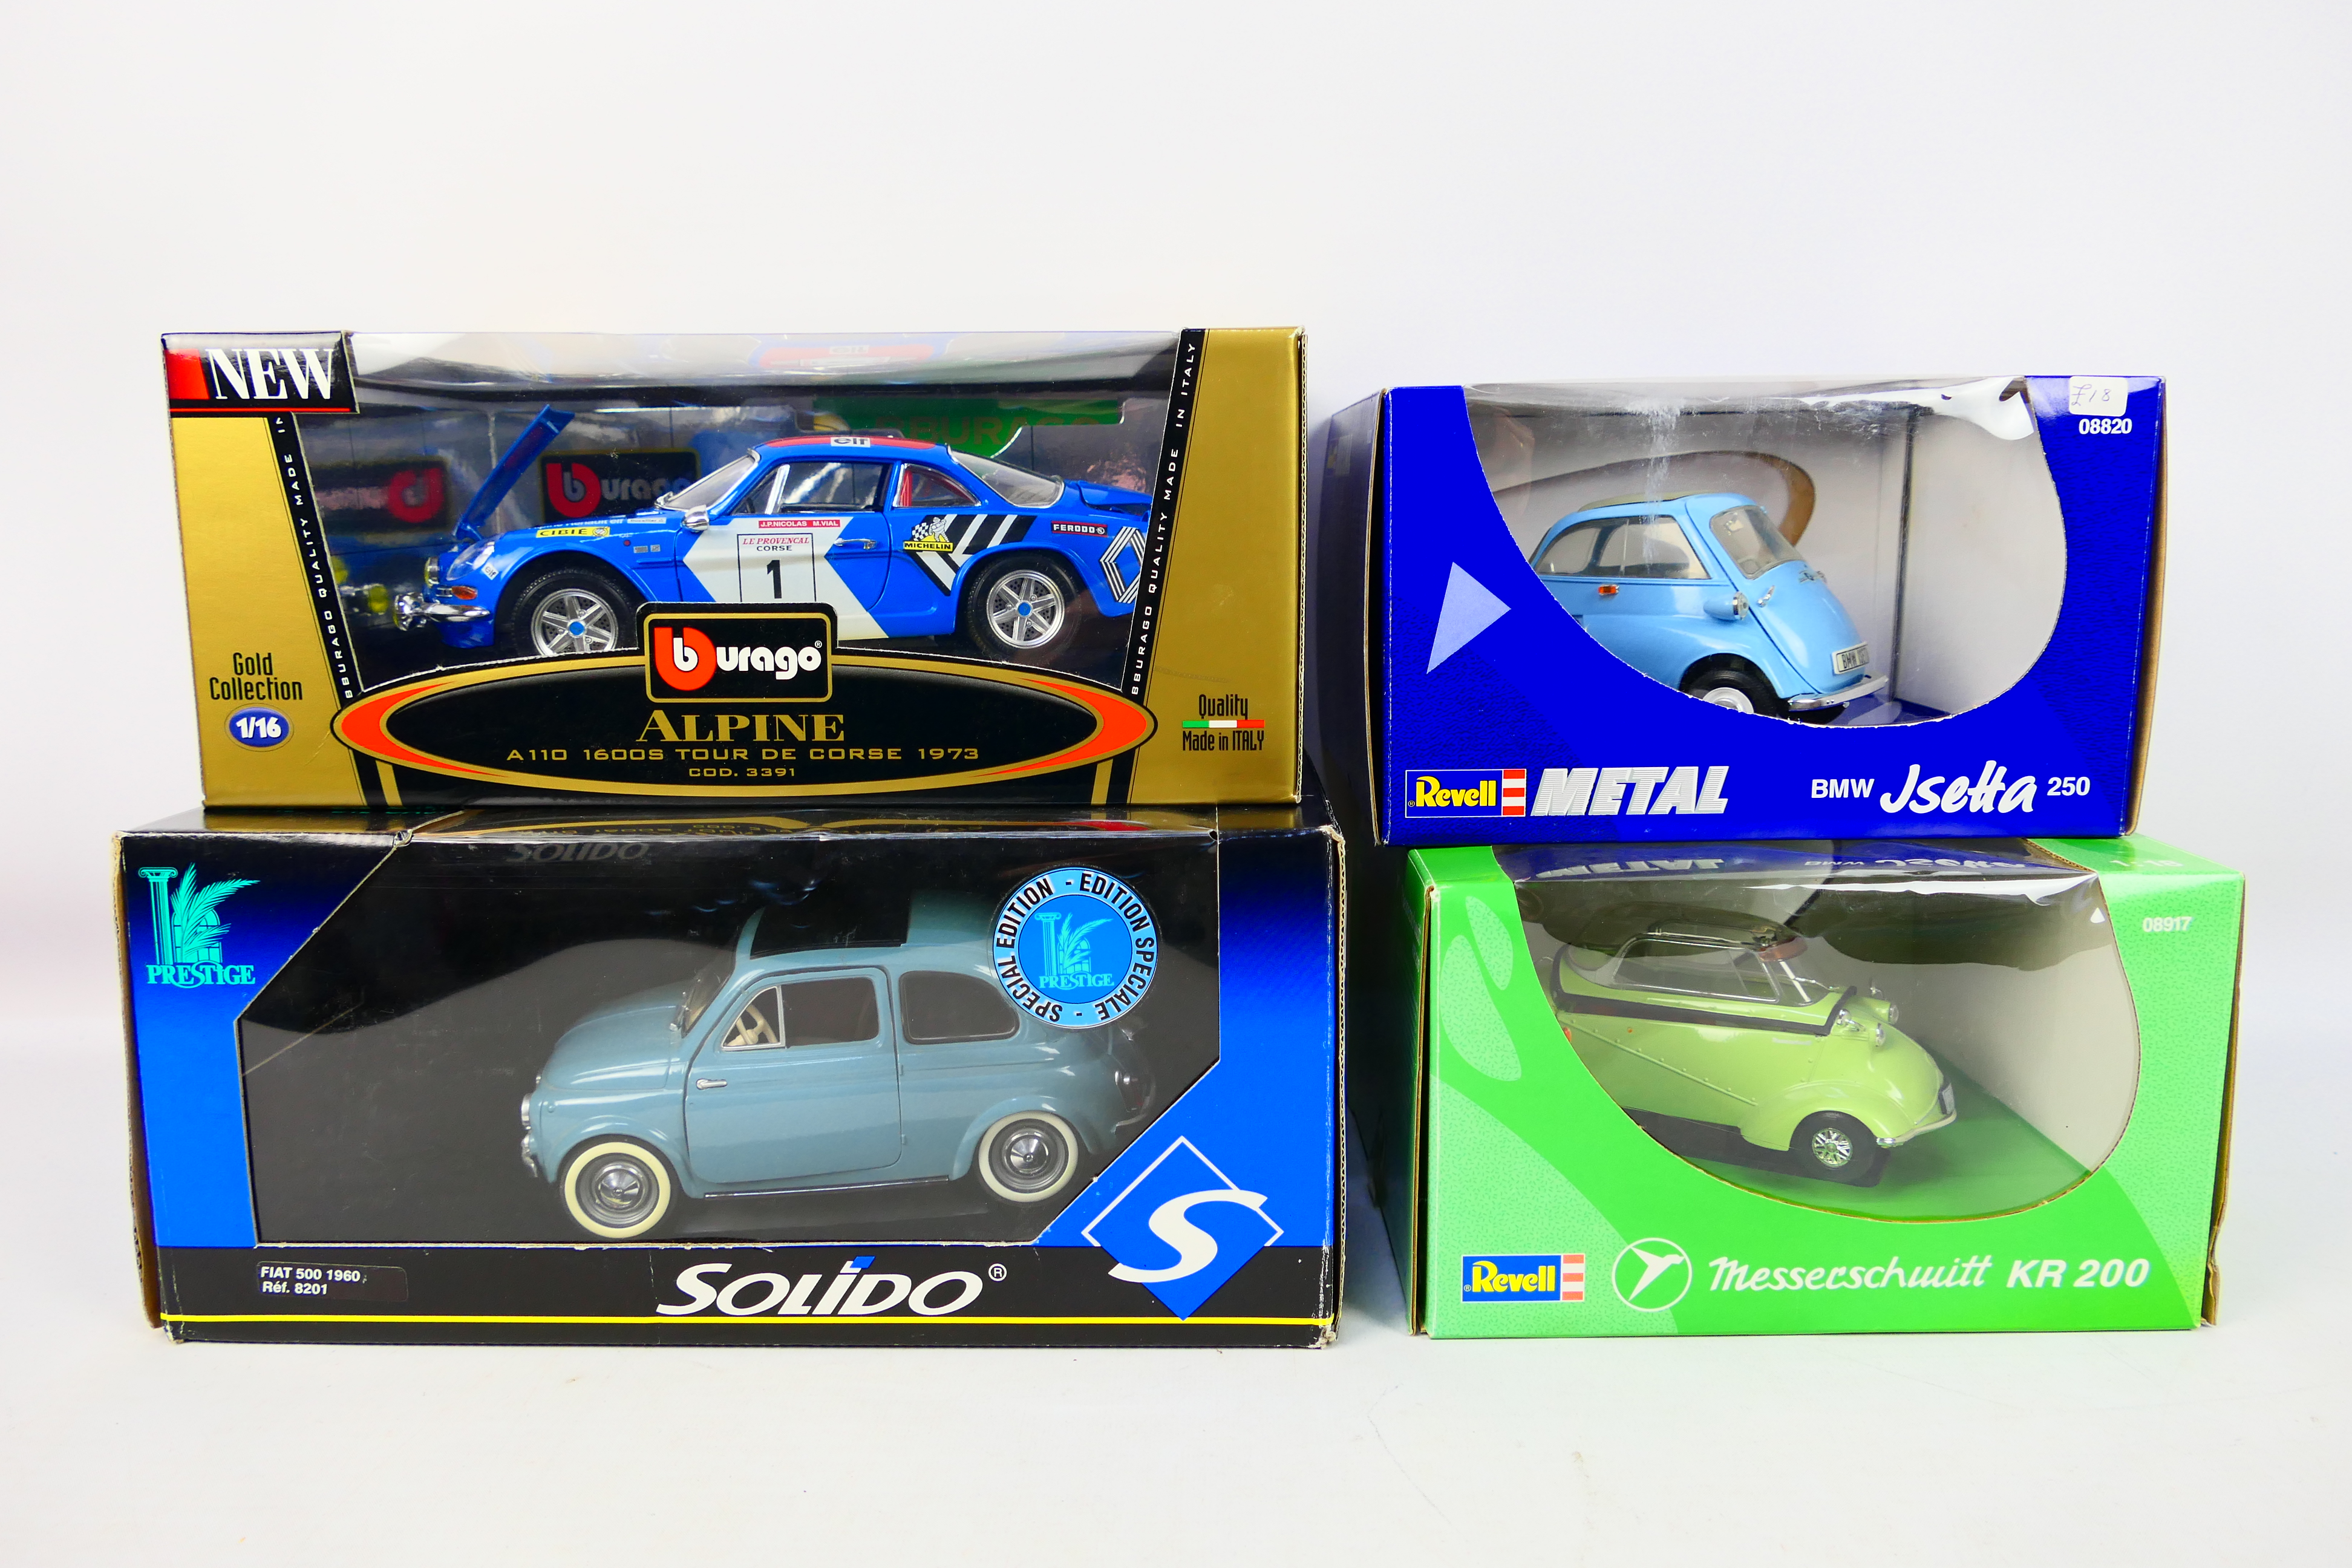 Bburago - Solido - Revell - Four boxed diecast 1:18 scale model cars.